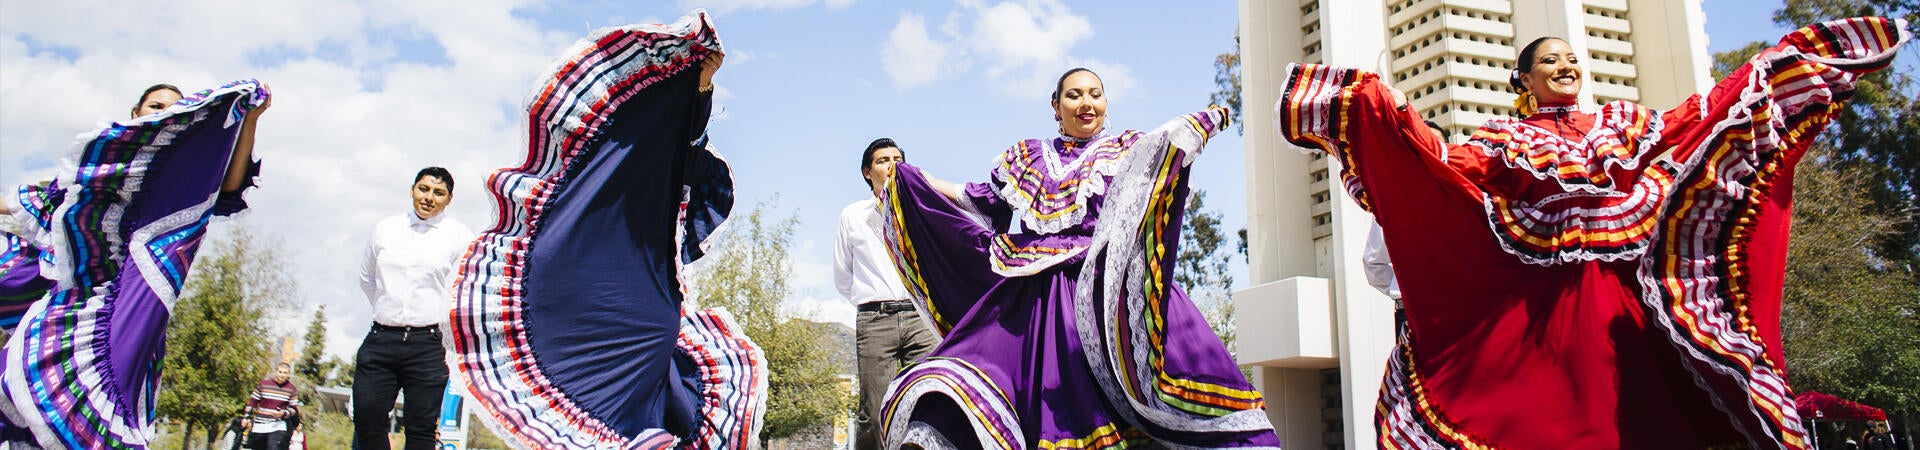 Women dancing a traditional Mexican dance